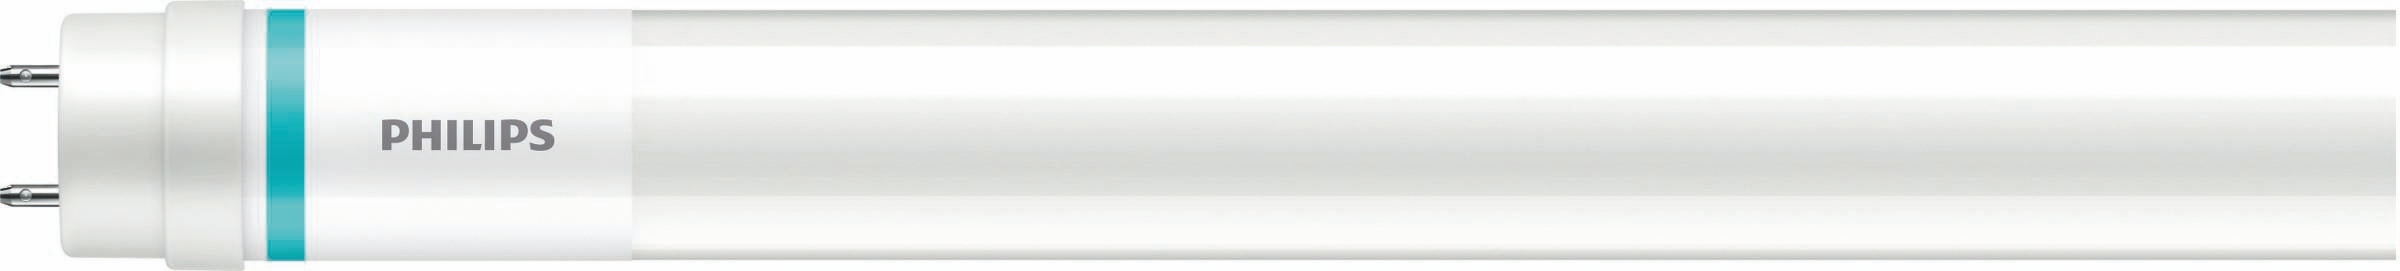 Philips 31688100 MASTER Value LEDtube T8 KVG/VVG/230V 1500 mm, 190 °, 23 W, 840, 3700 lm, G13, nicht dimmbar